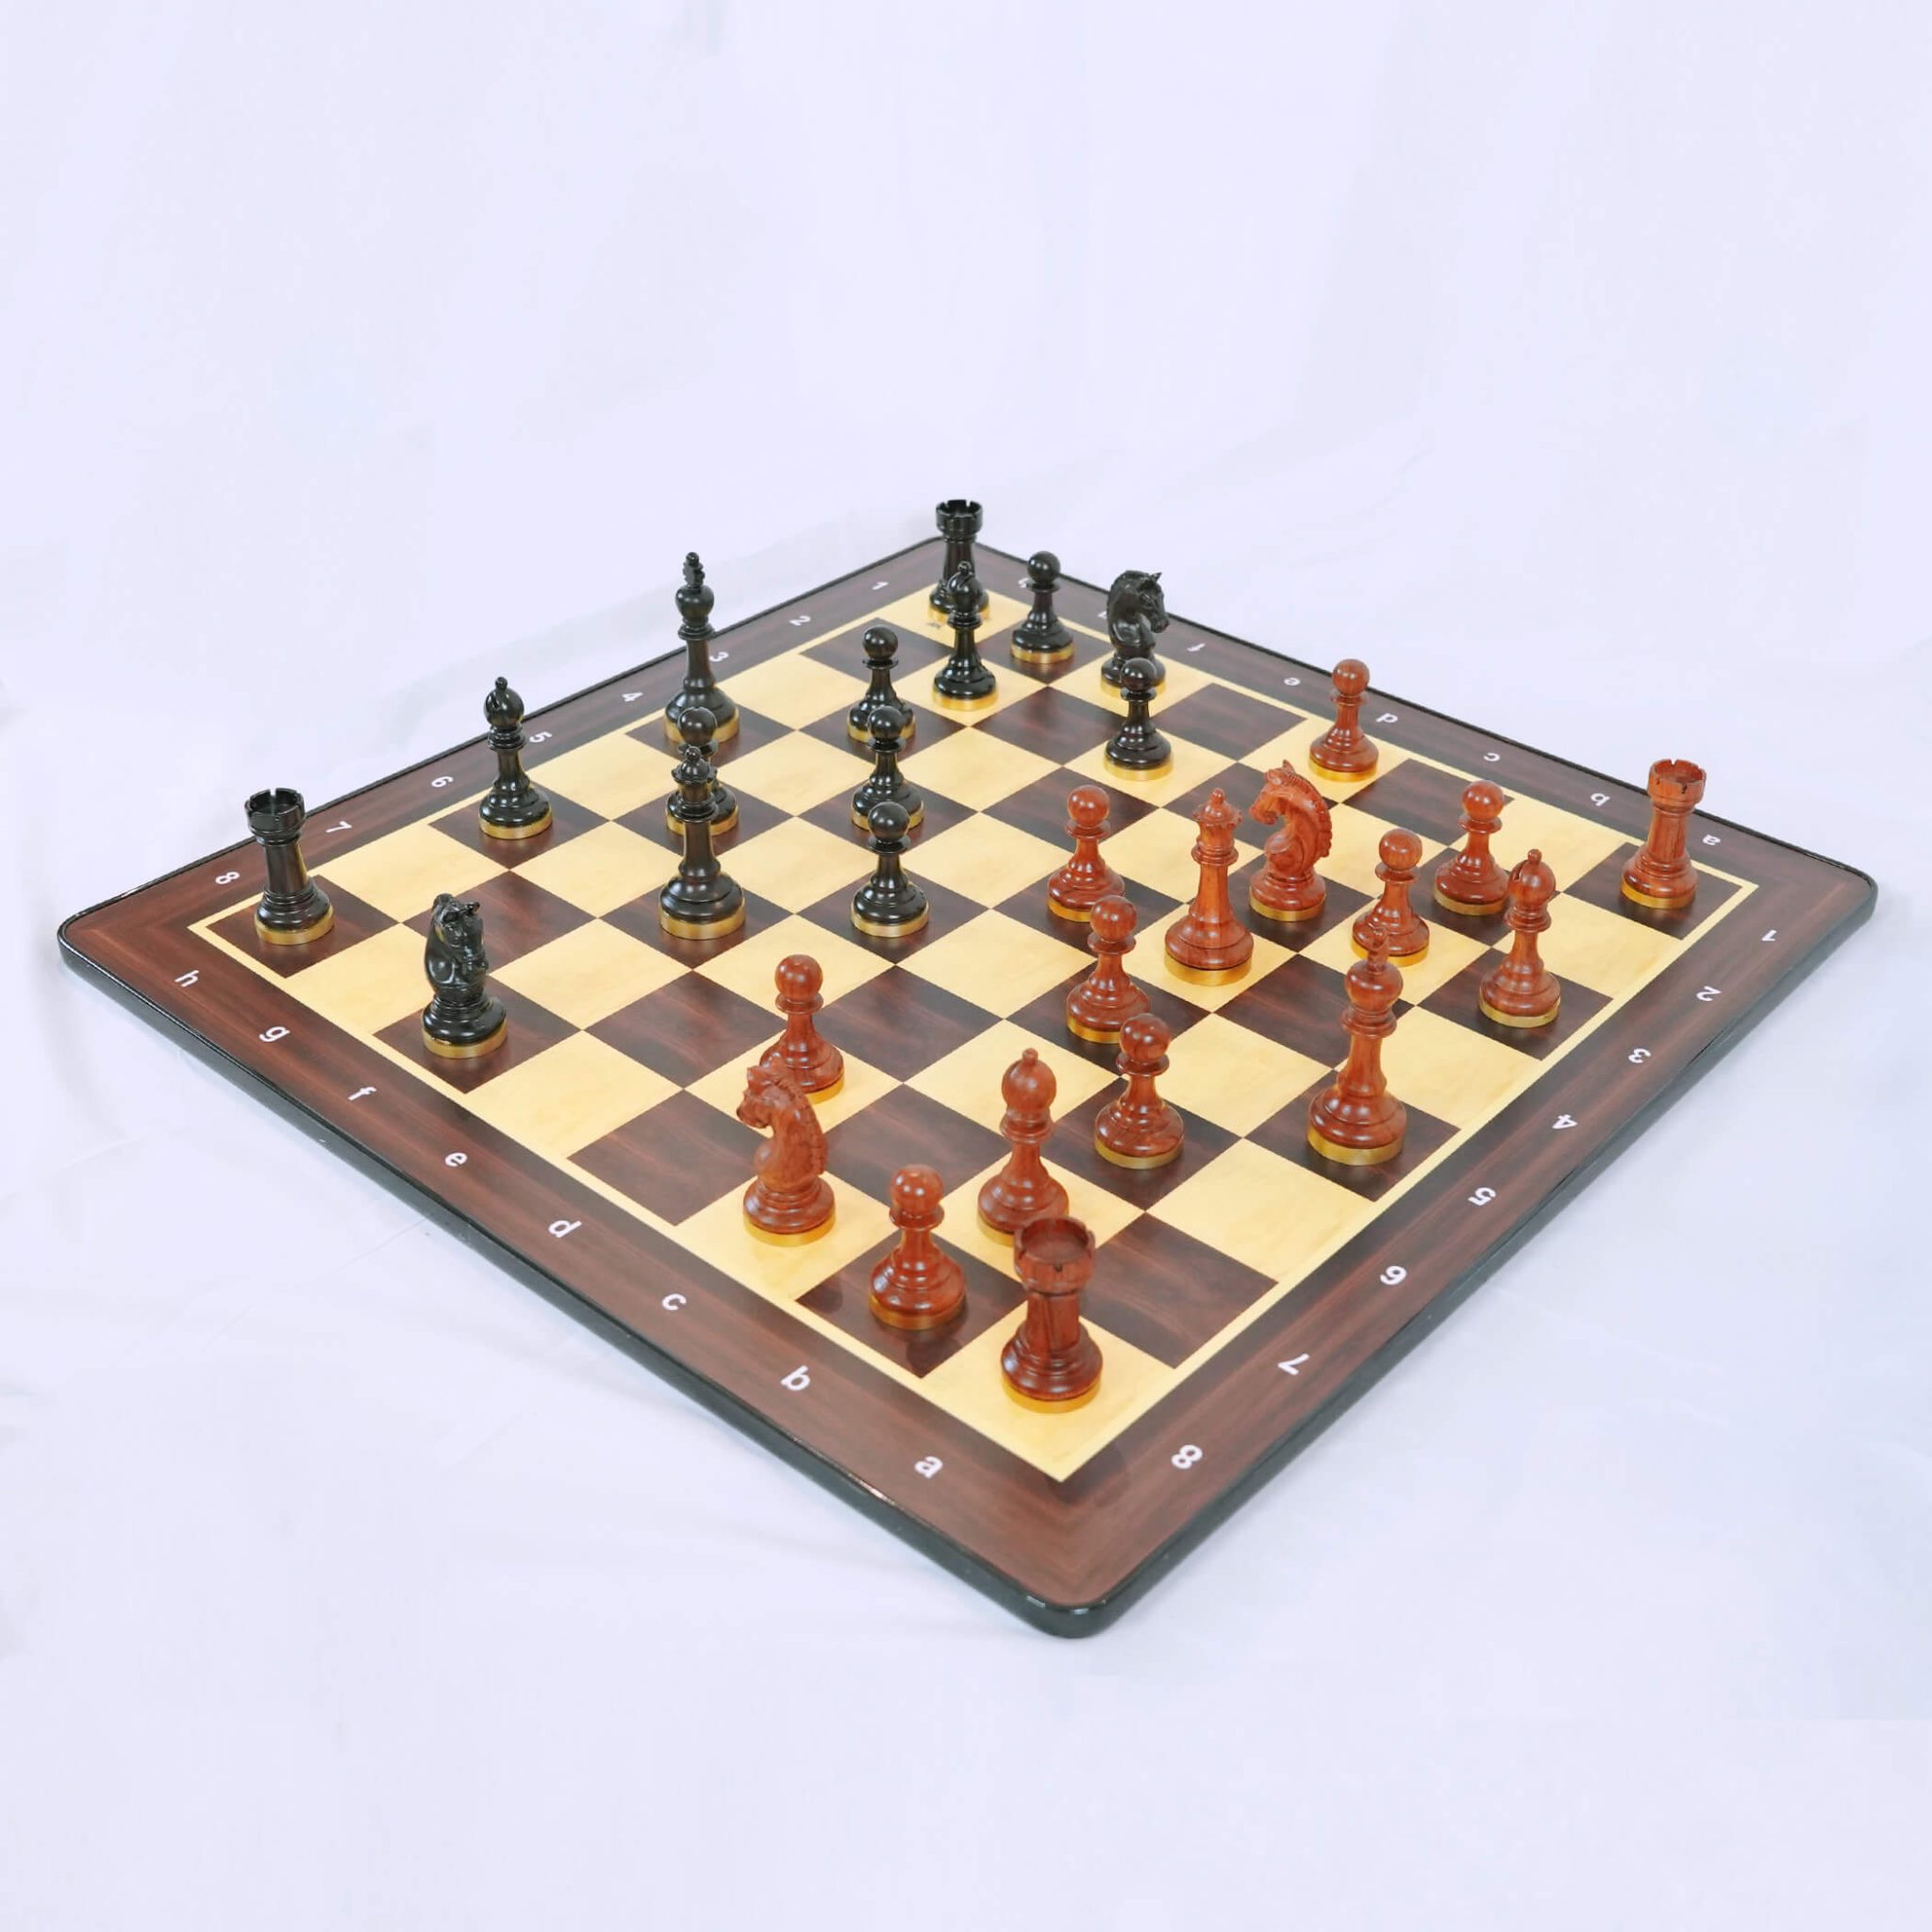 FIDE Chess Set by BeardedJester